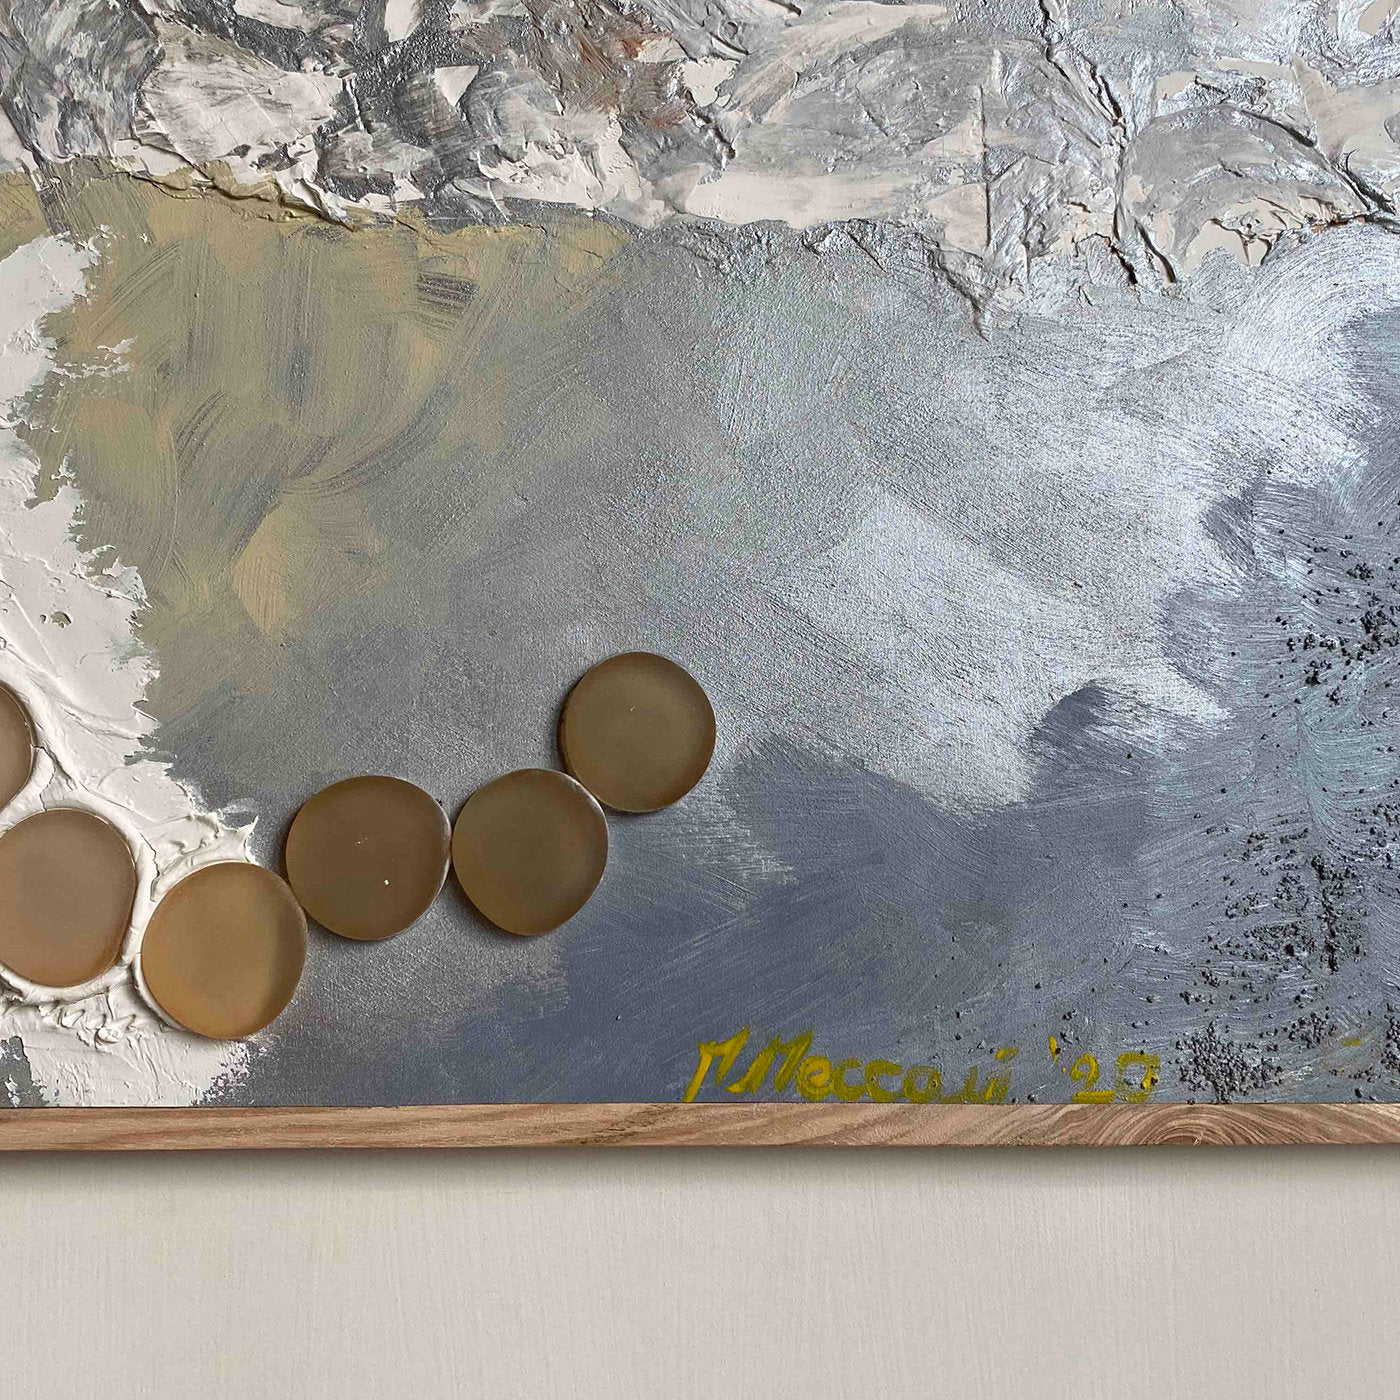 Tempesta Decorative Panel and Wall Hanger by Mascia Meccani - Alternative view 3